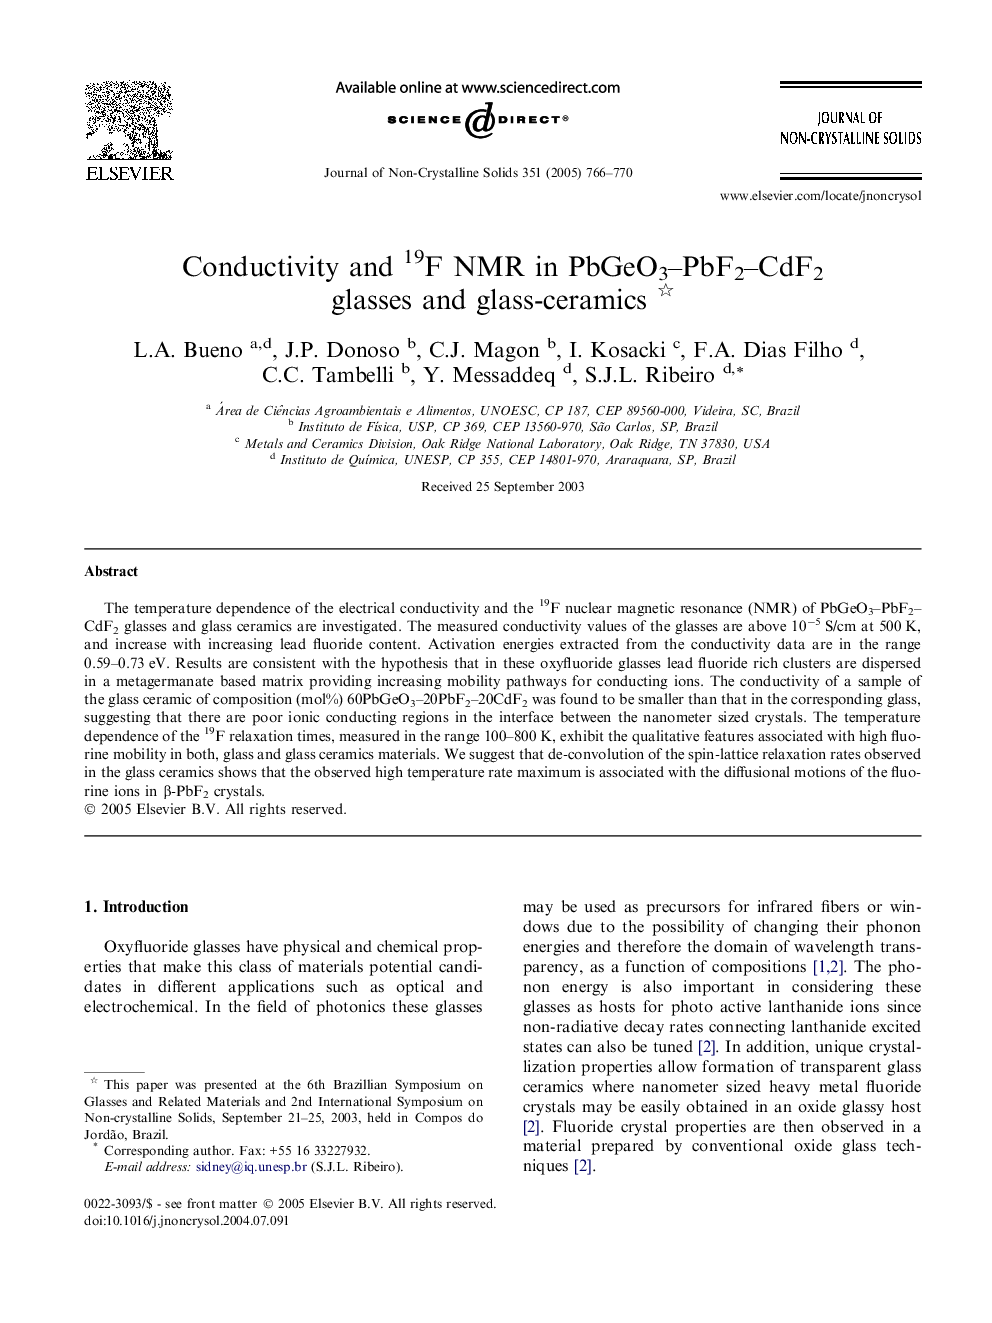 Conductivity and 19F NMR in PbGeO3-PbF2-CdF2 glasses and glass-ceramics